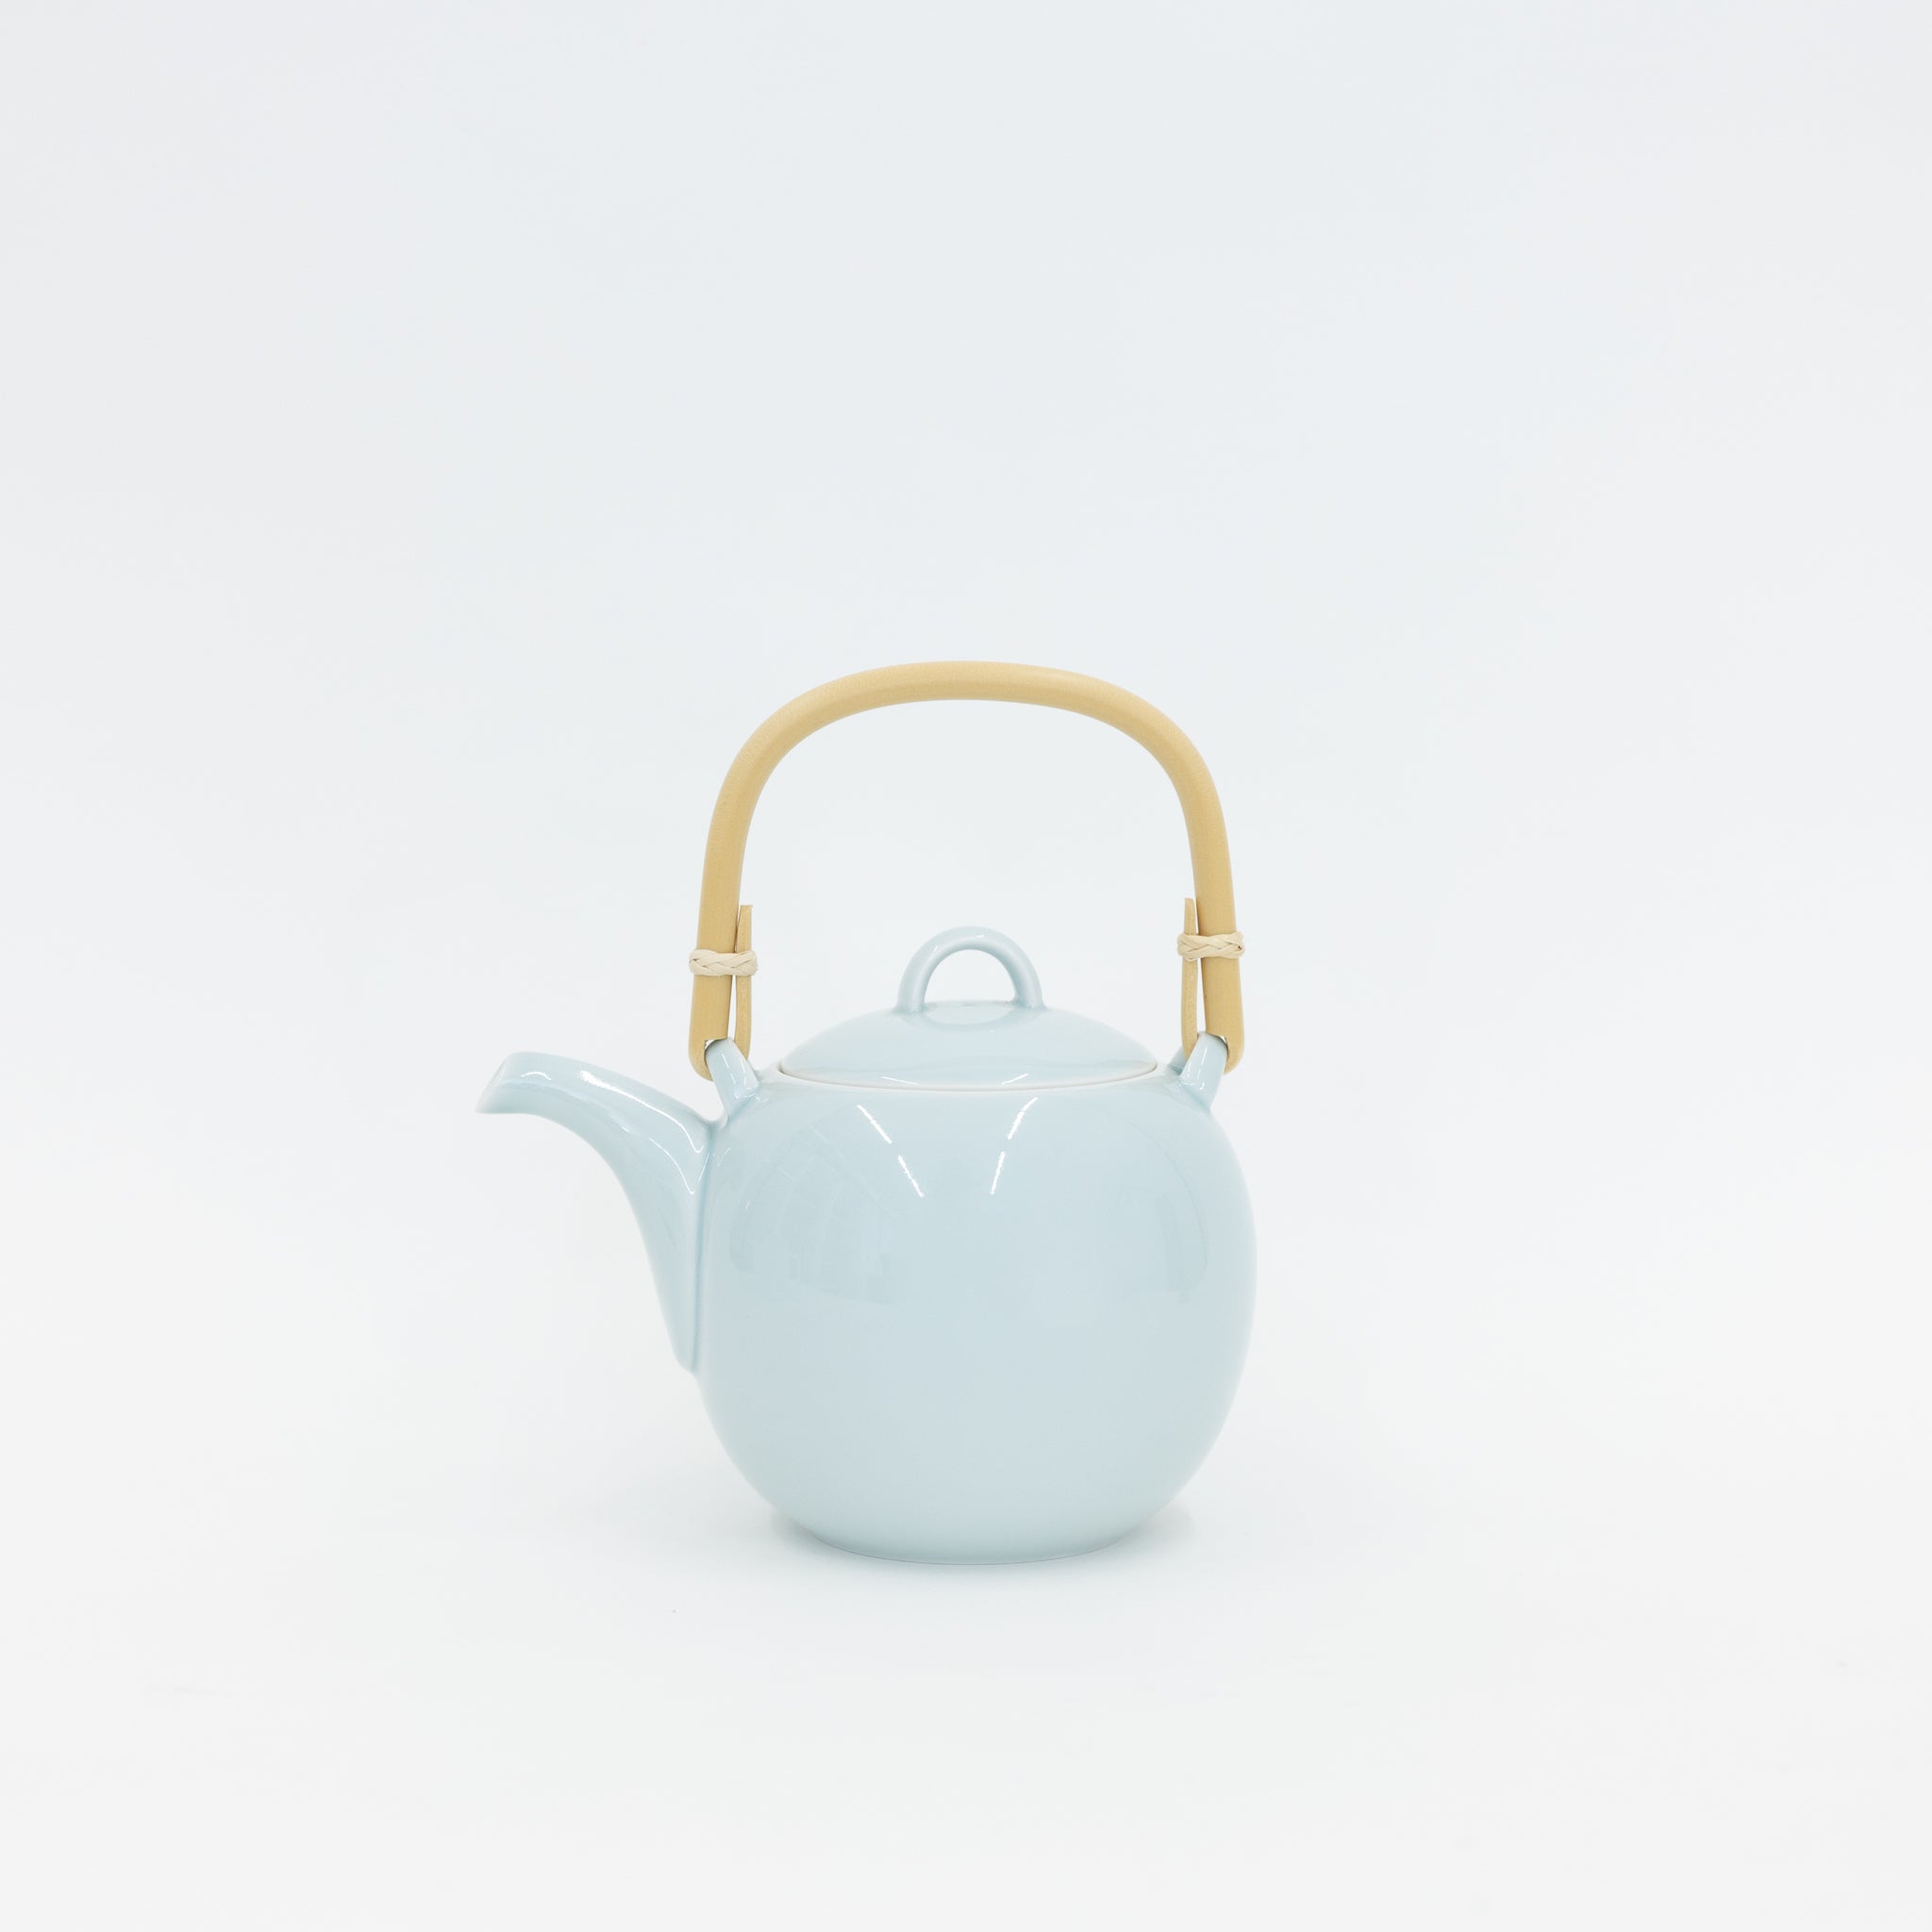 https://cdn.shopify.com/s/files/1/0012/4072/7612/products/hakusan-porcelain-mayu-teapot-698096.jpg?v=1695012526&width=2048